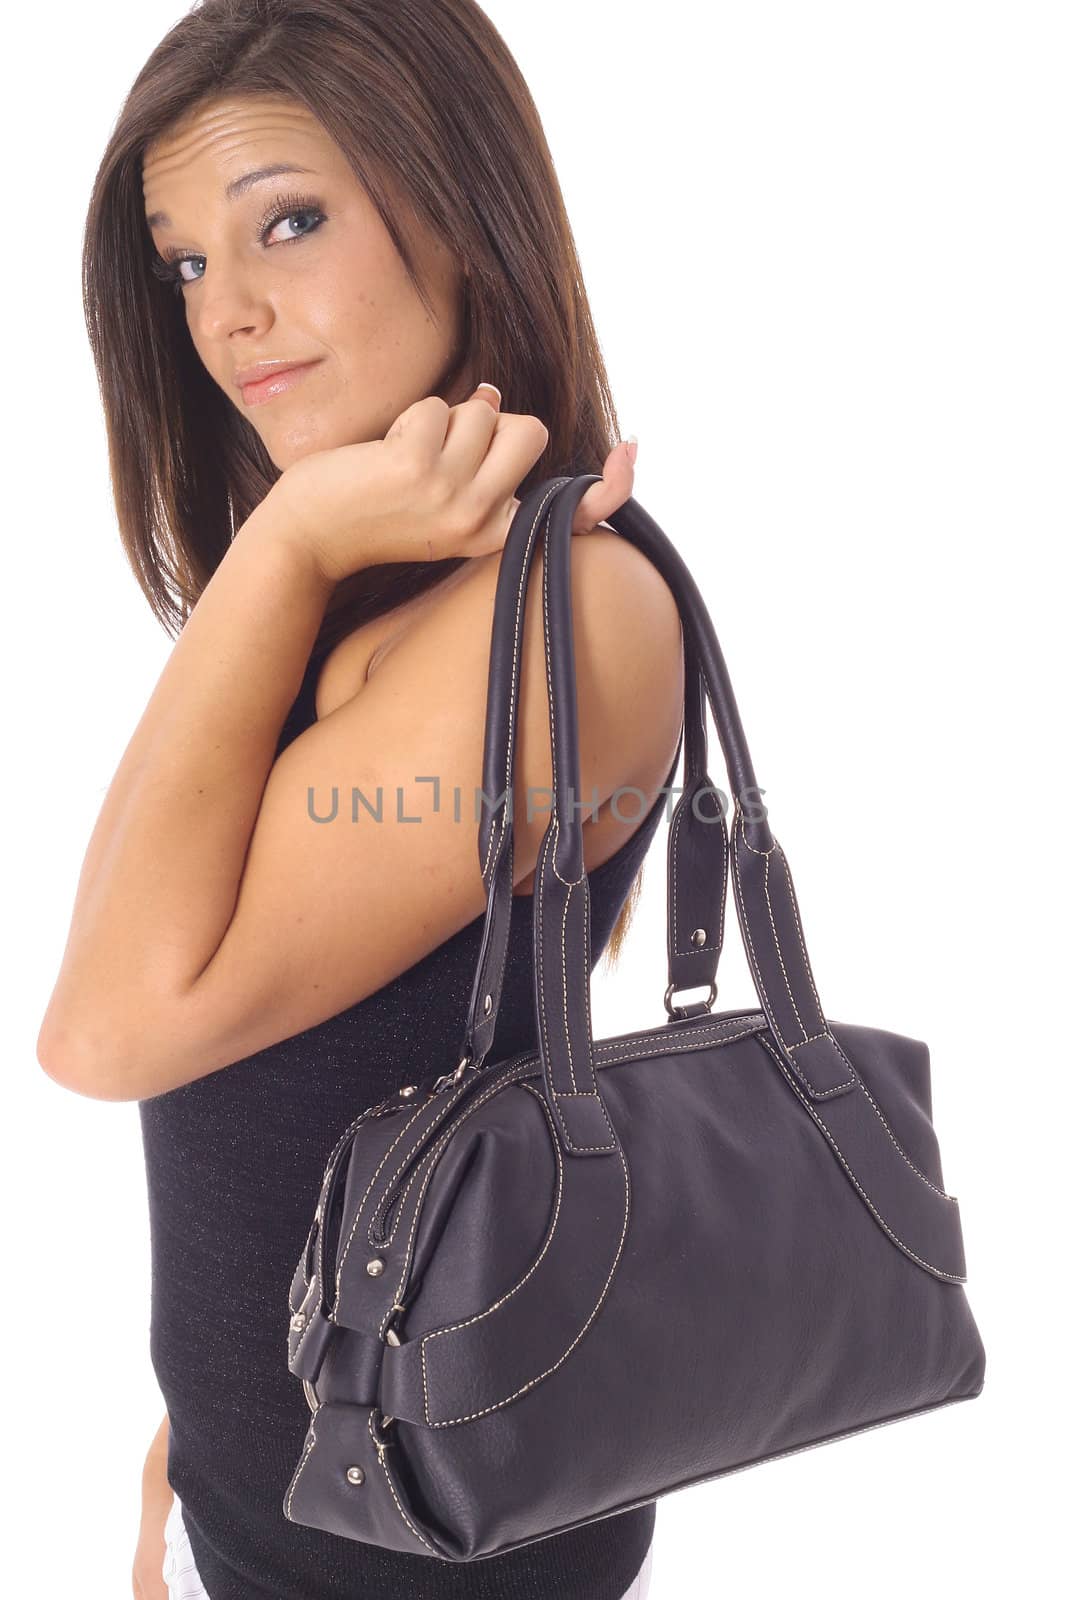 shot of a latino model carrying fashion bag by creativestock